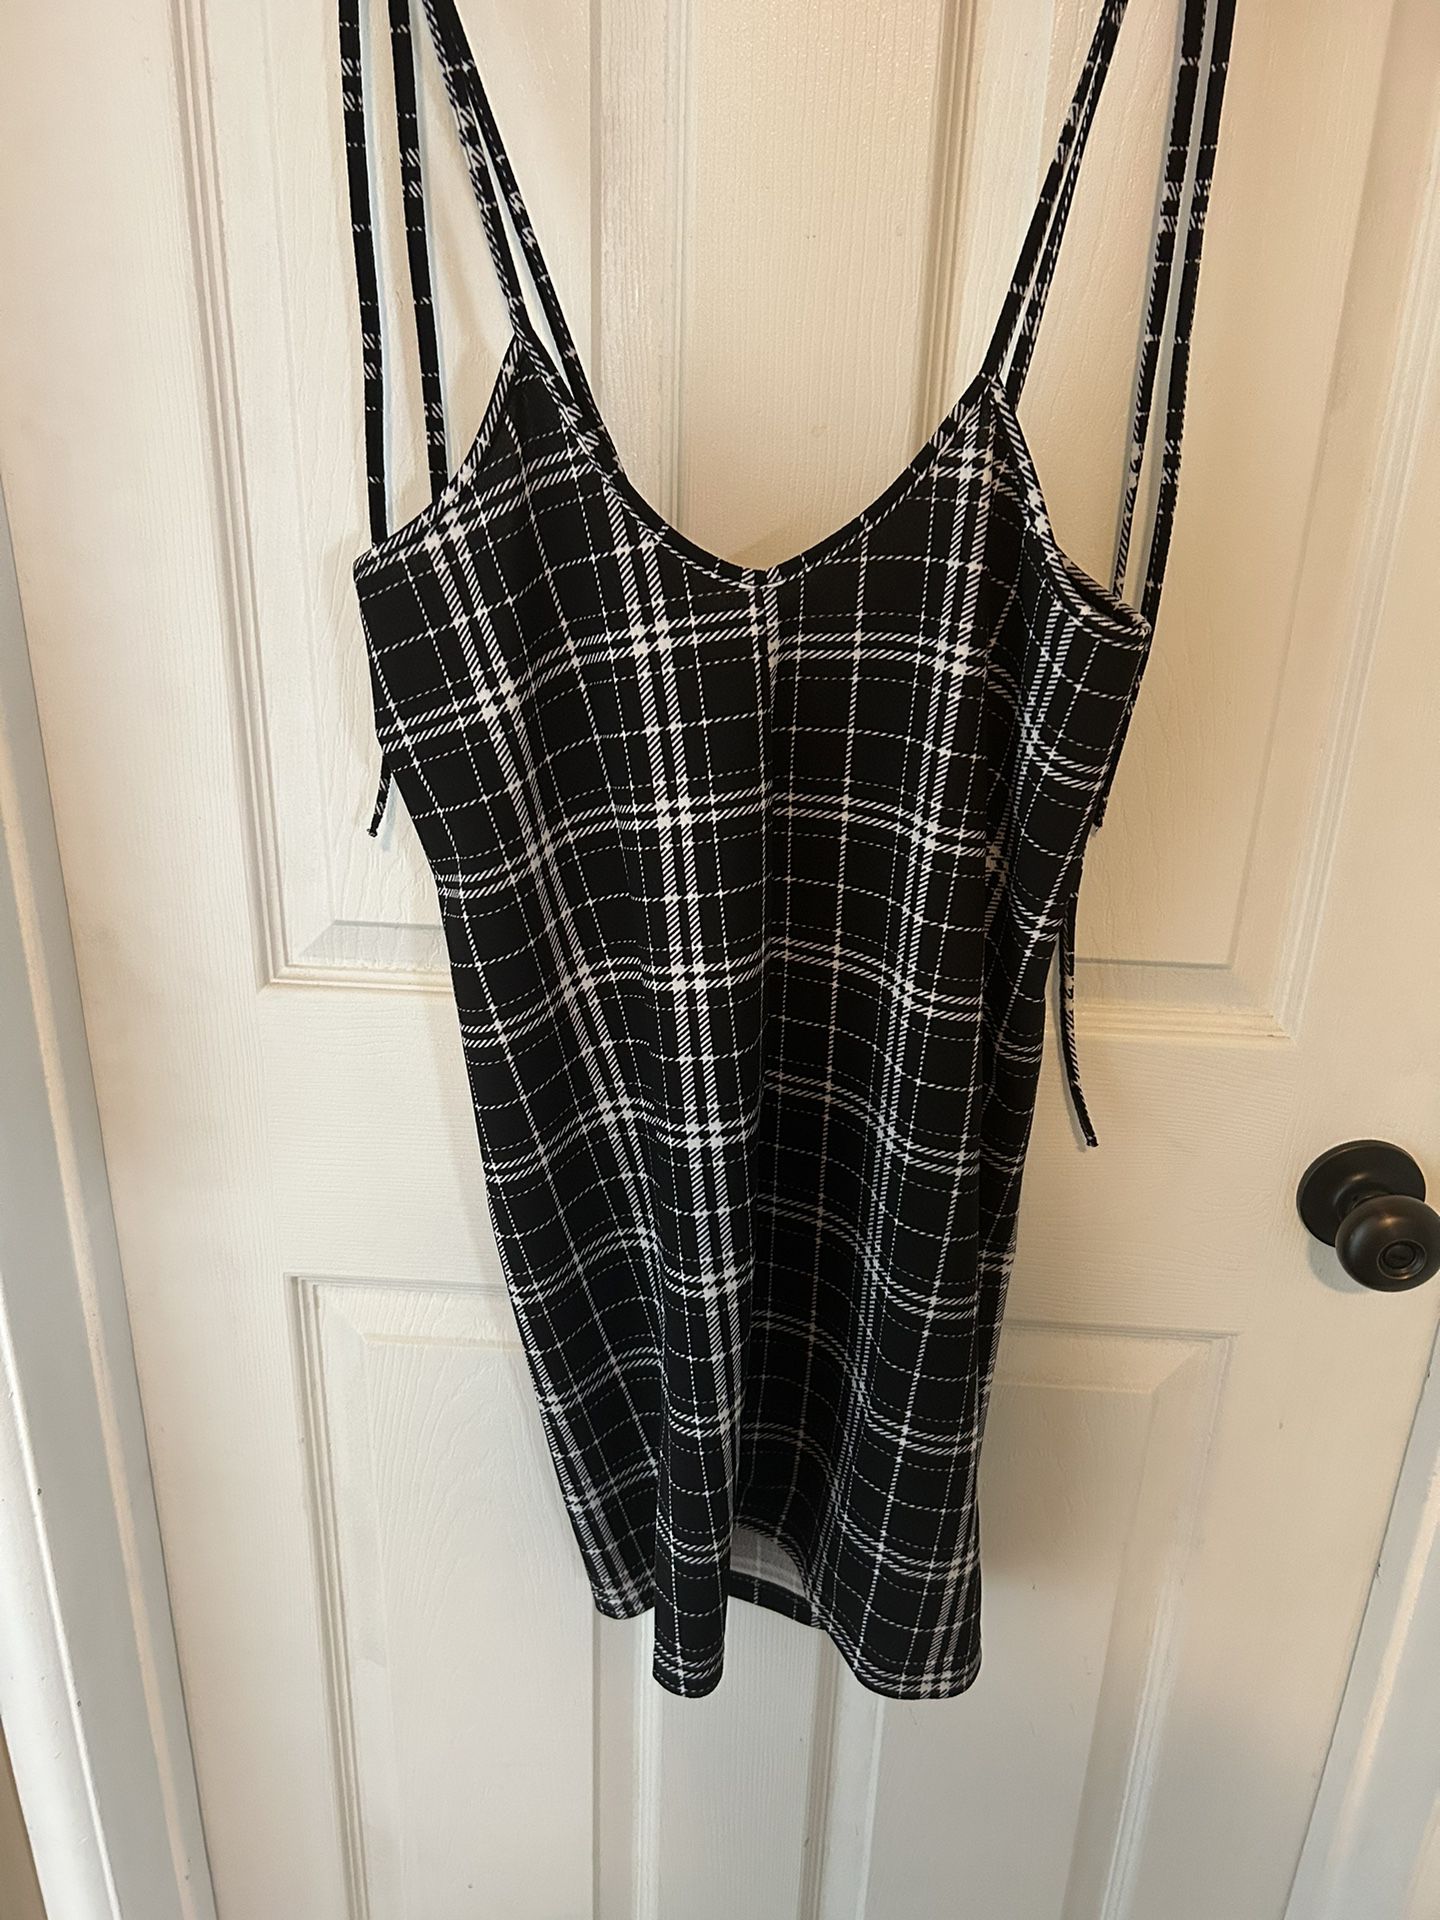 Overalls Dress Size XL